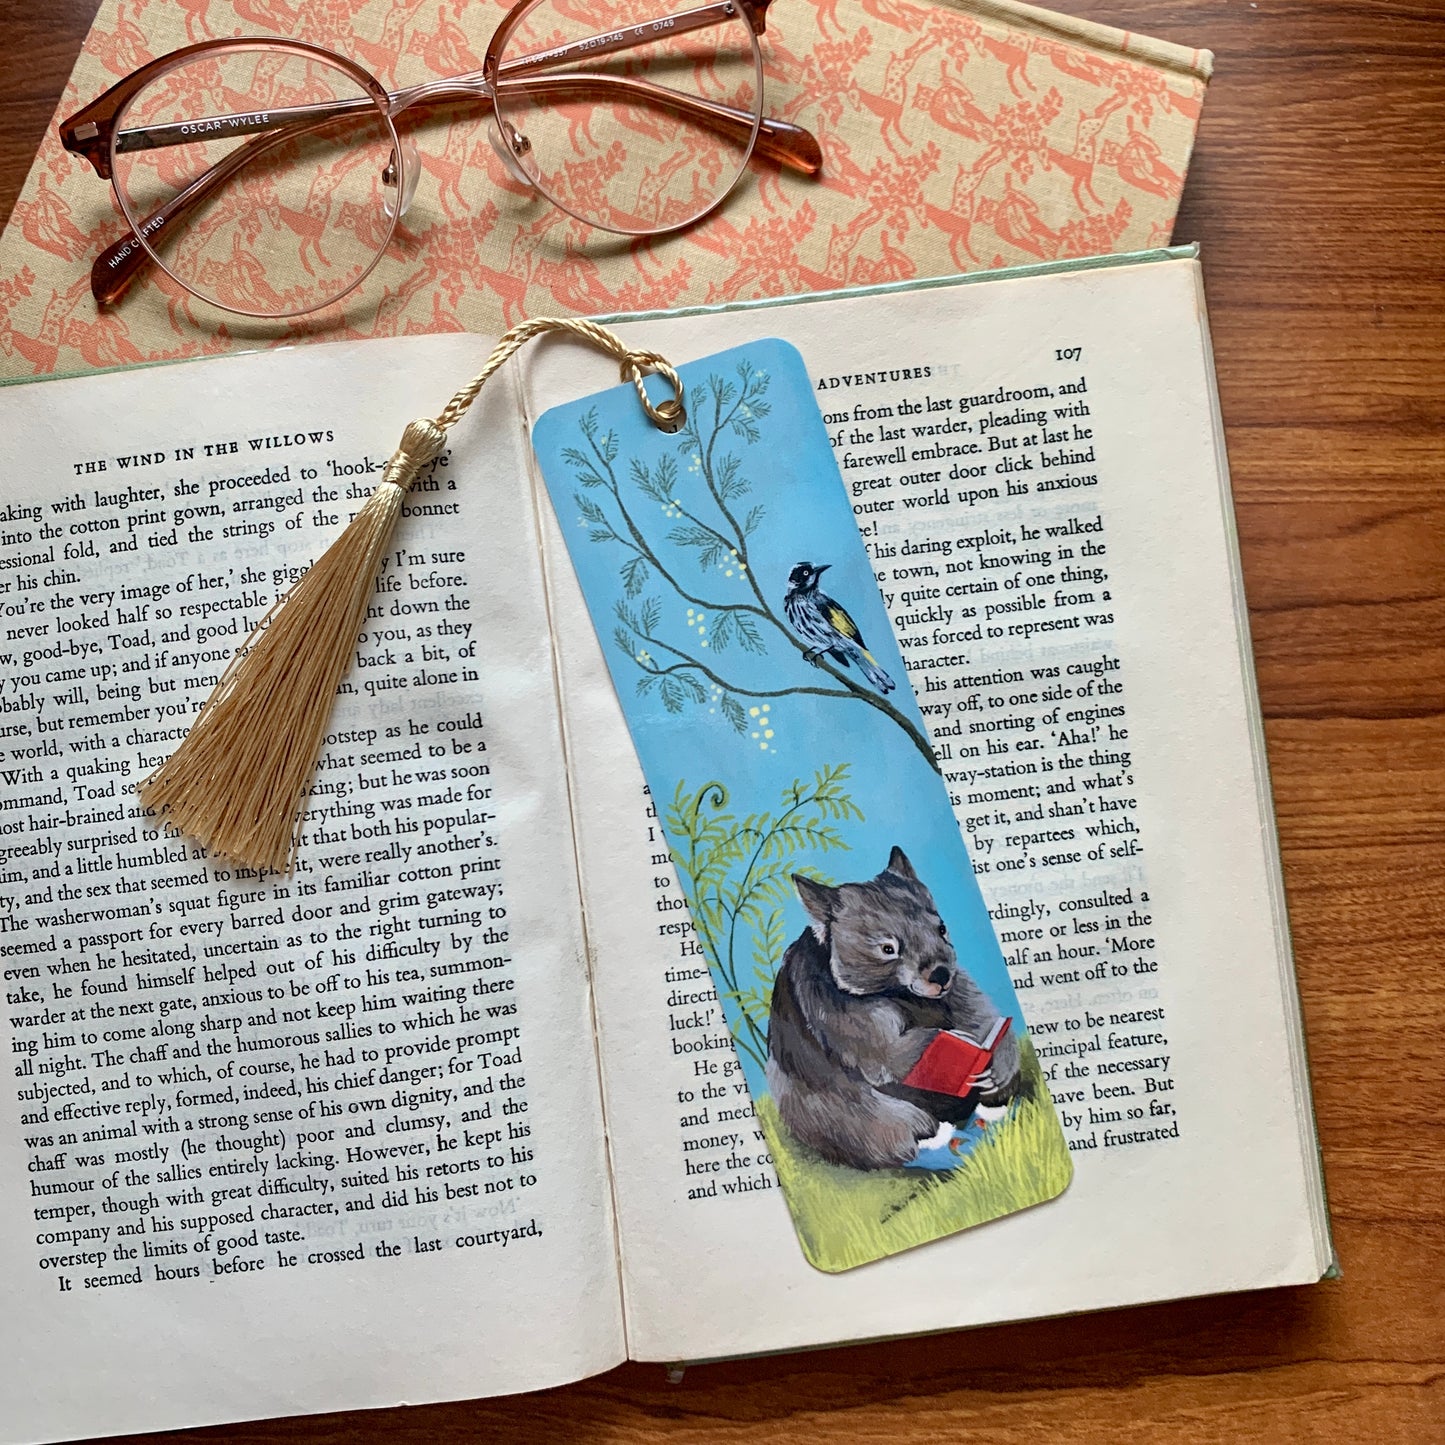 Bookmark - Cosy Wombat - Cute illustration